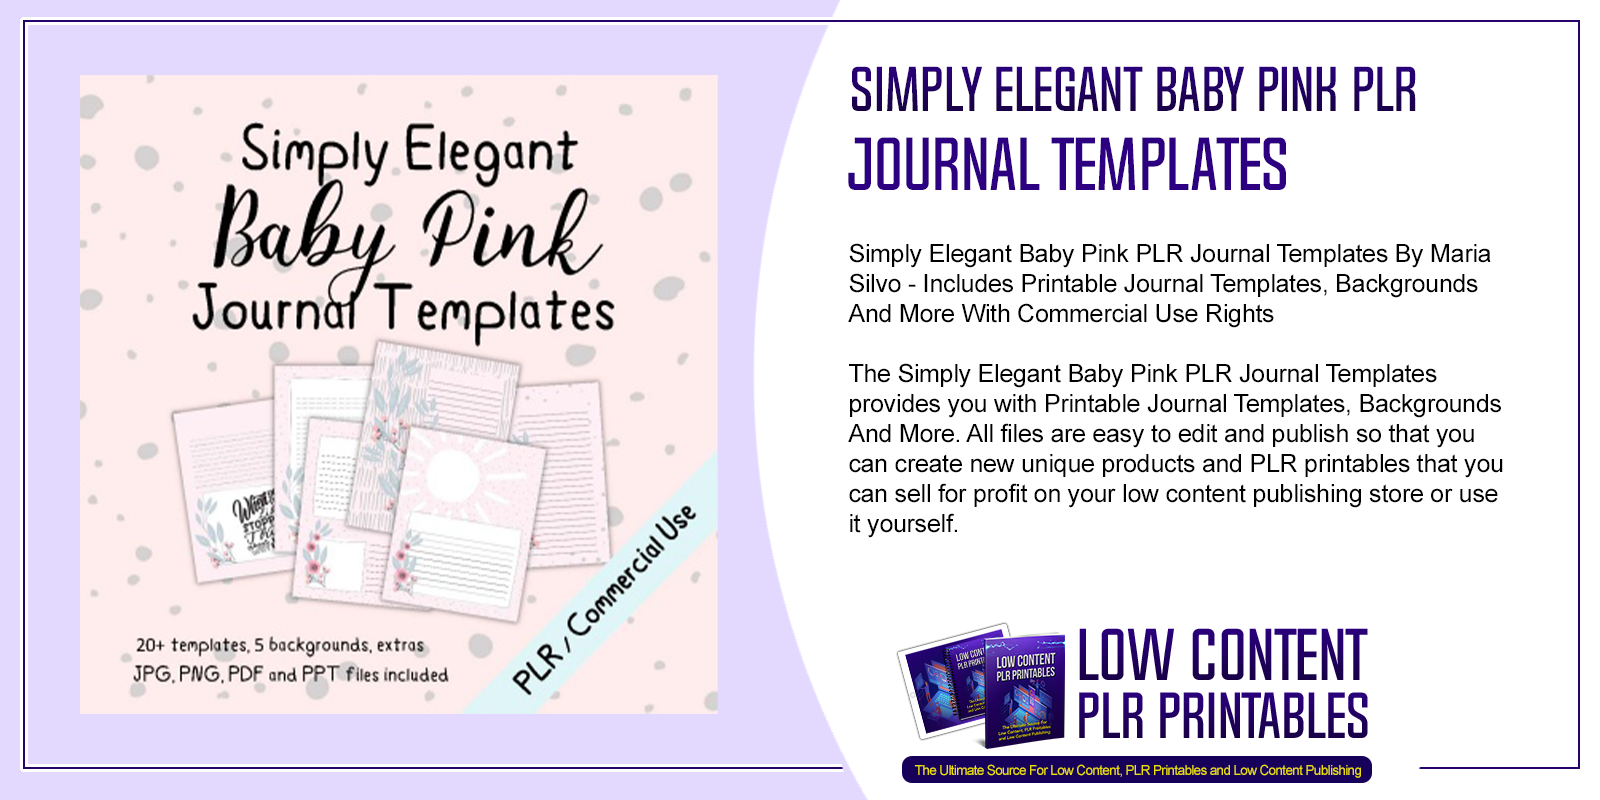 Simply Elegant Baby Pink PLR Journal Templates